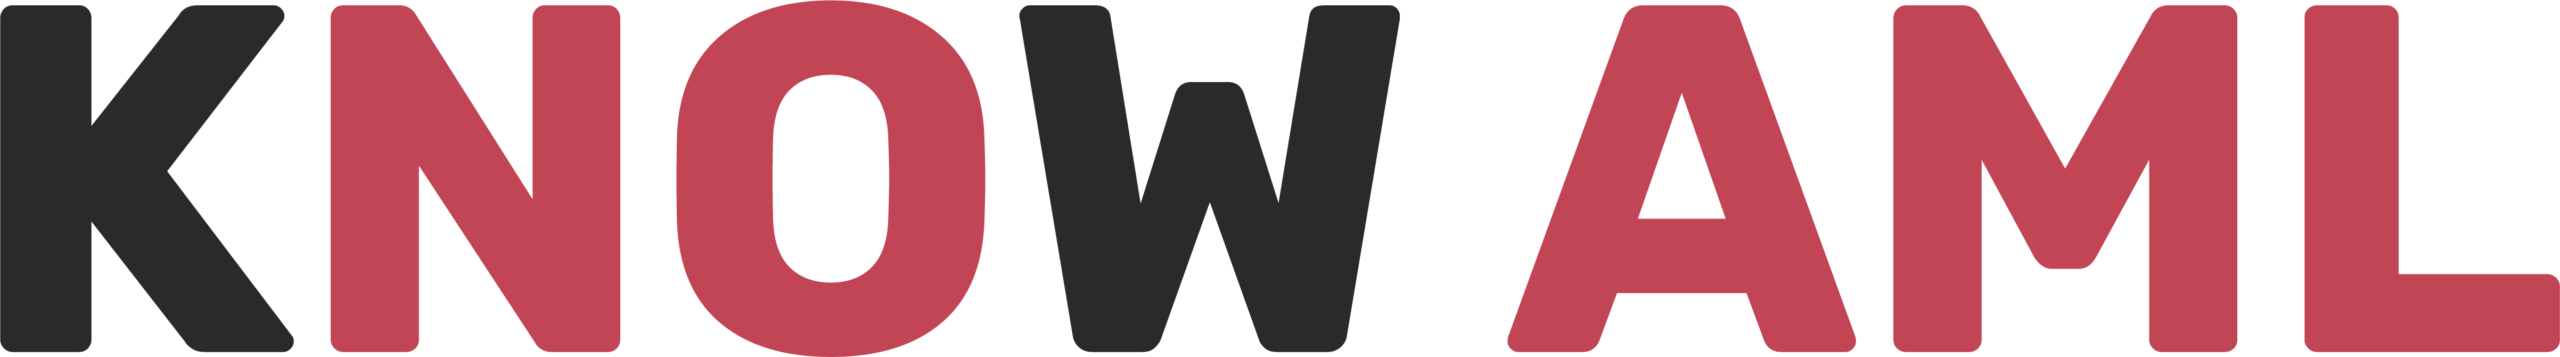 KnowAML logo